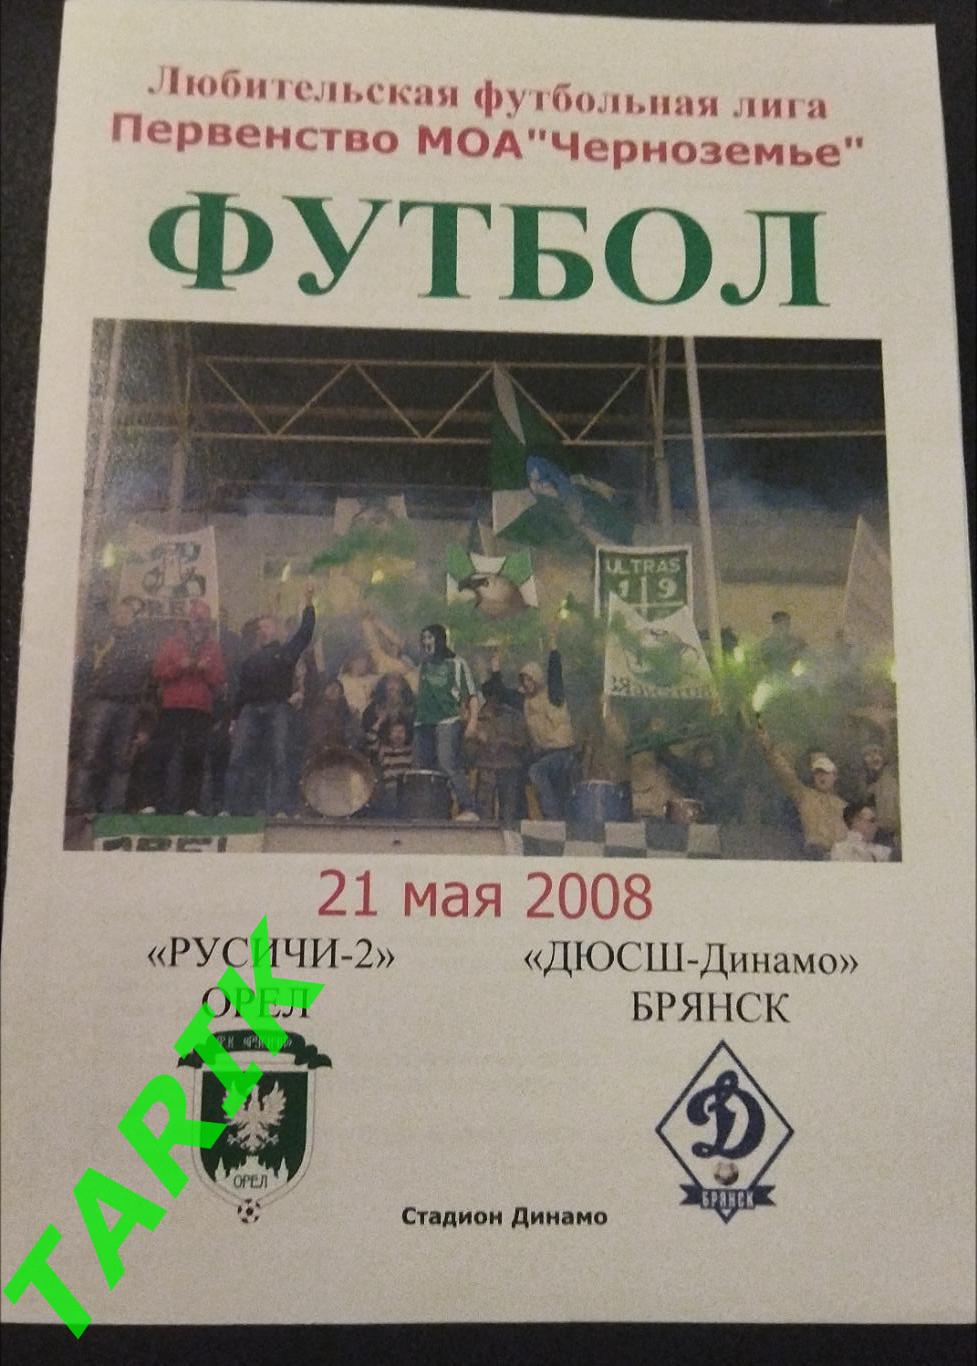 Русичи 2 (Орел) - ДЮСШ Динамо (Брянск) 2008